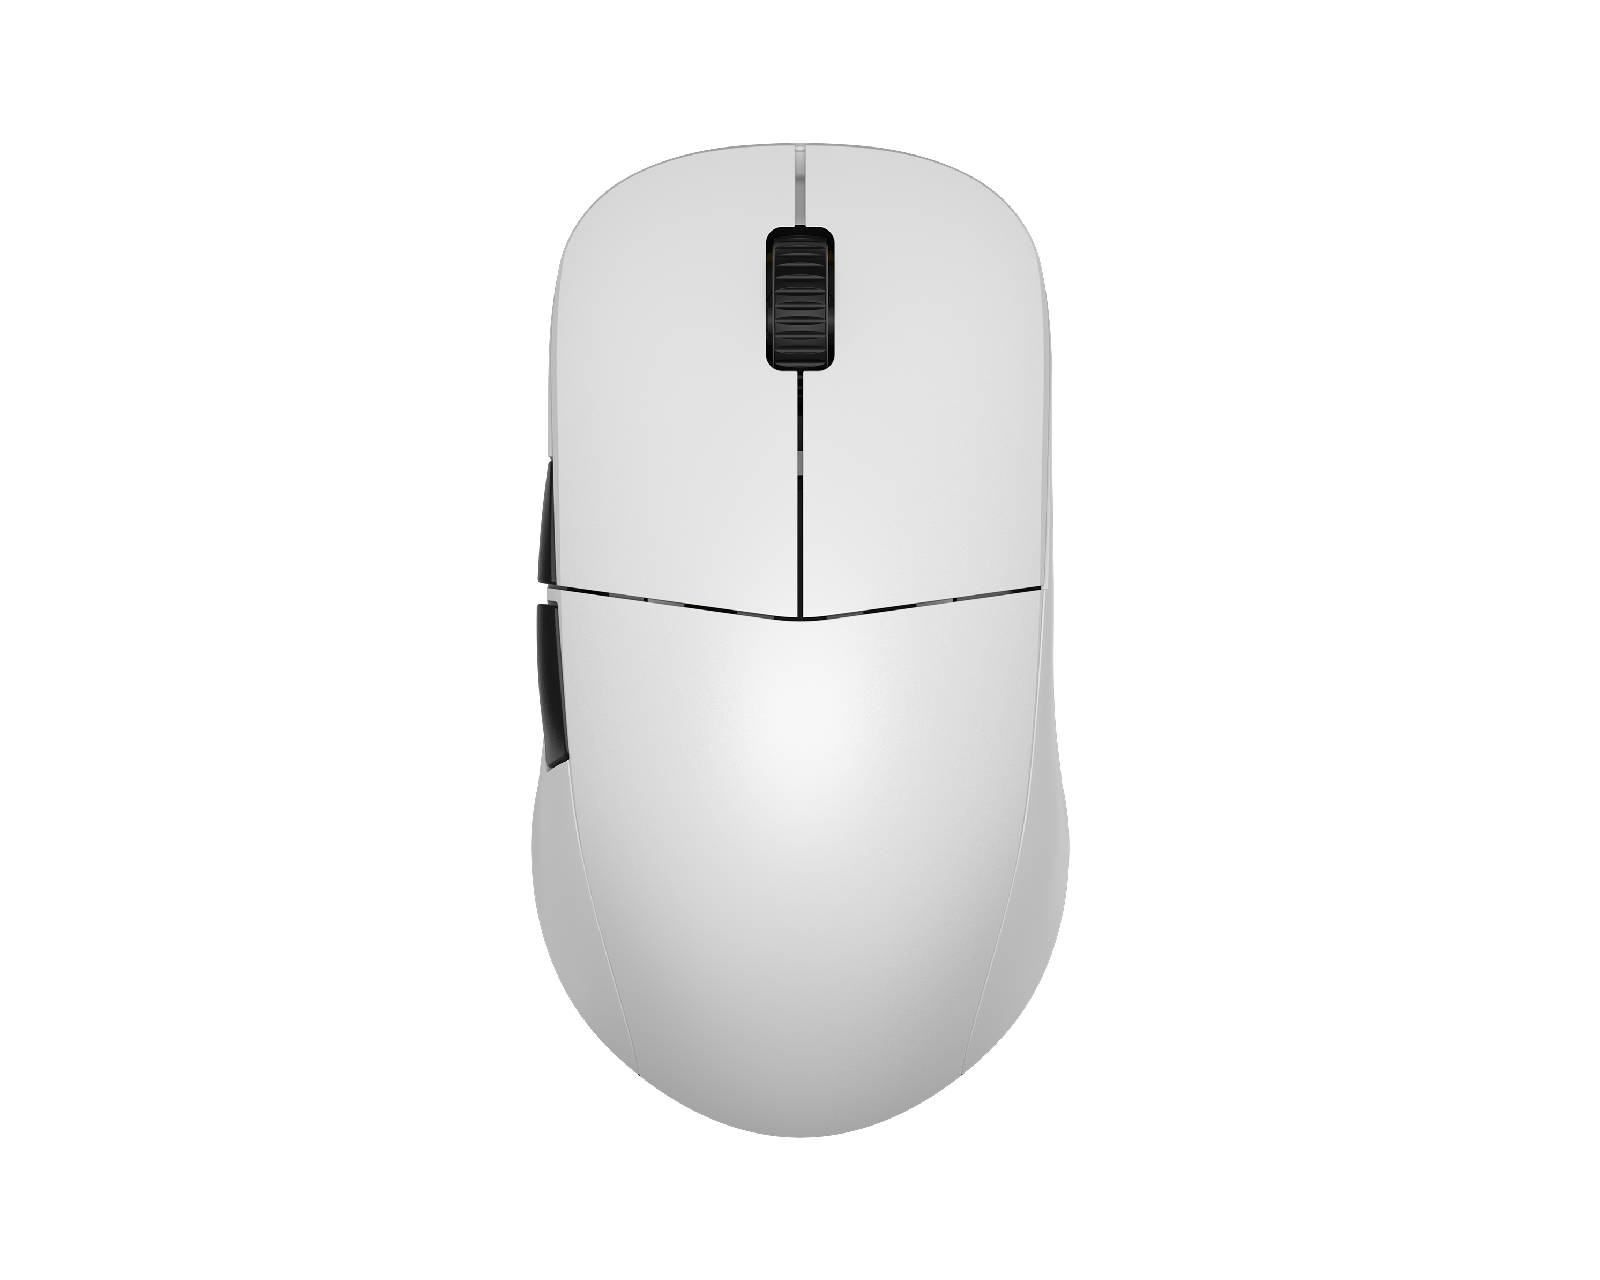 Endgame Gear XM2we Wireless Gaming Mouse - White